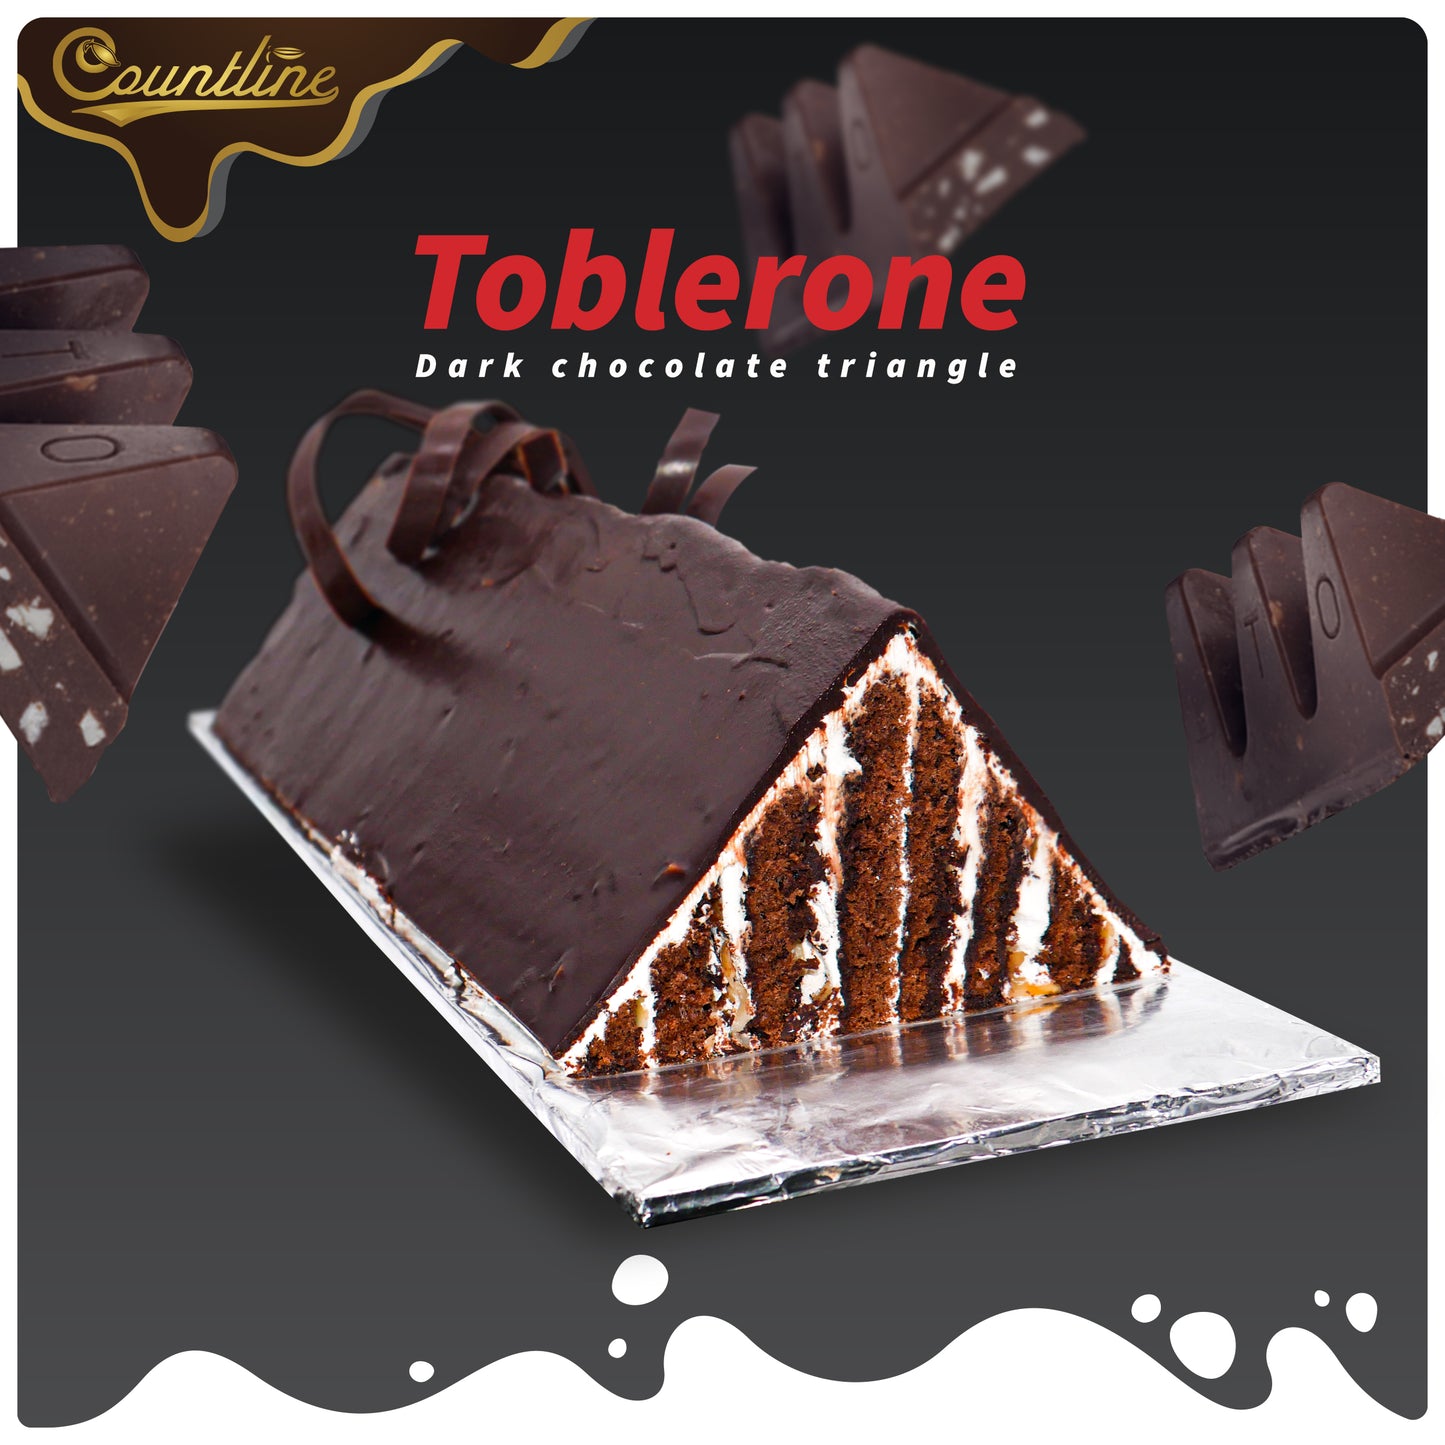 Toblerone dark chocolate triangle